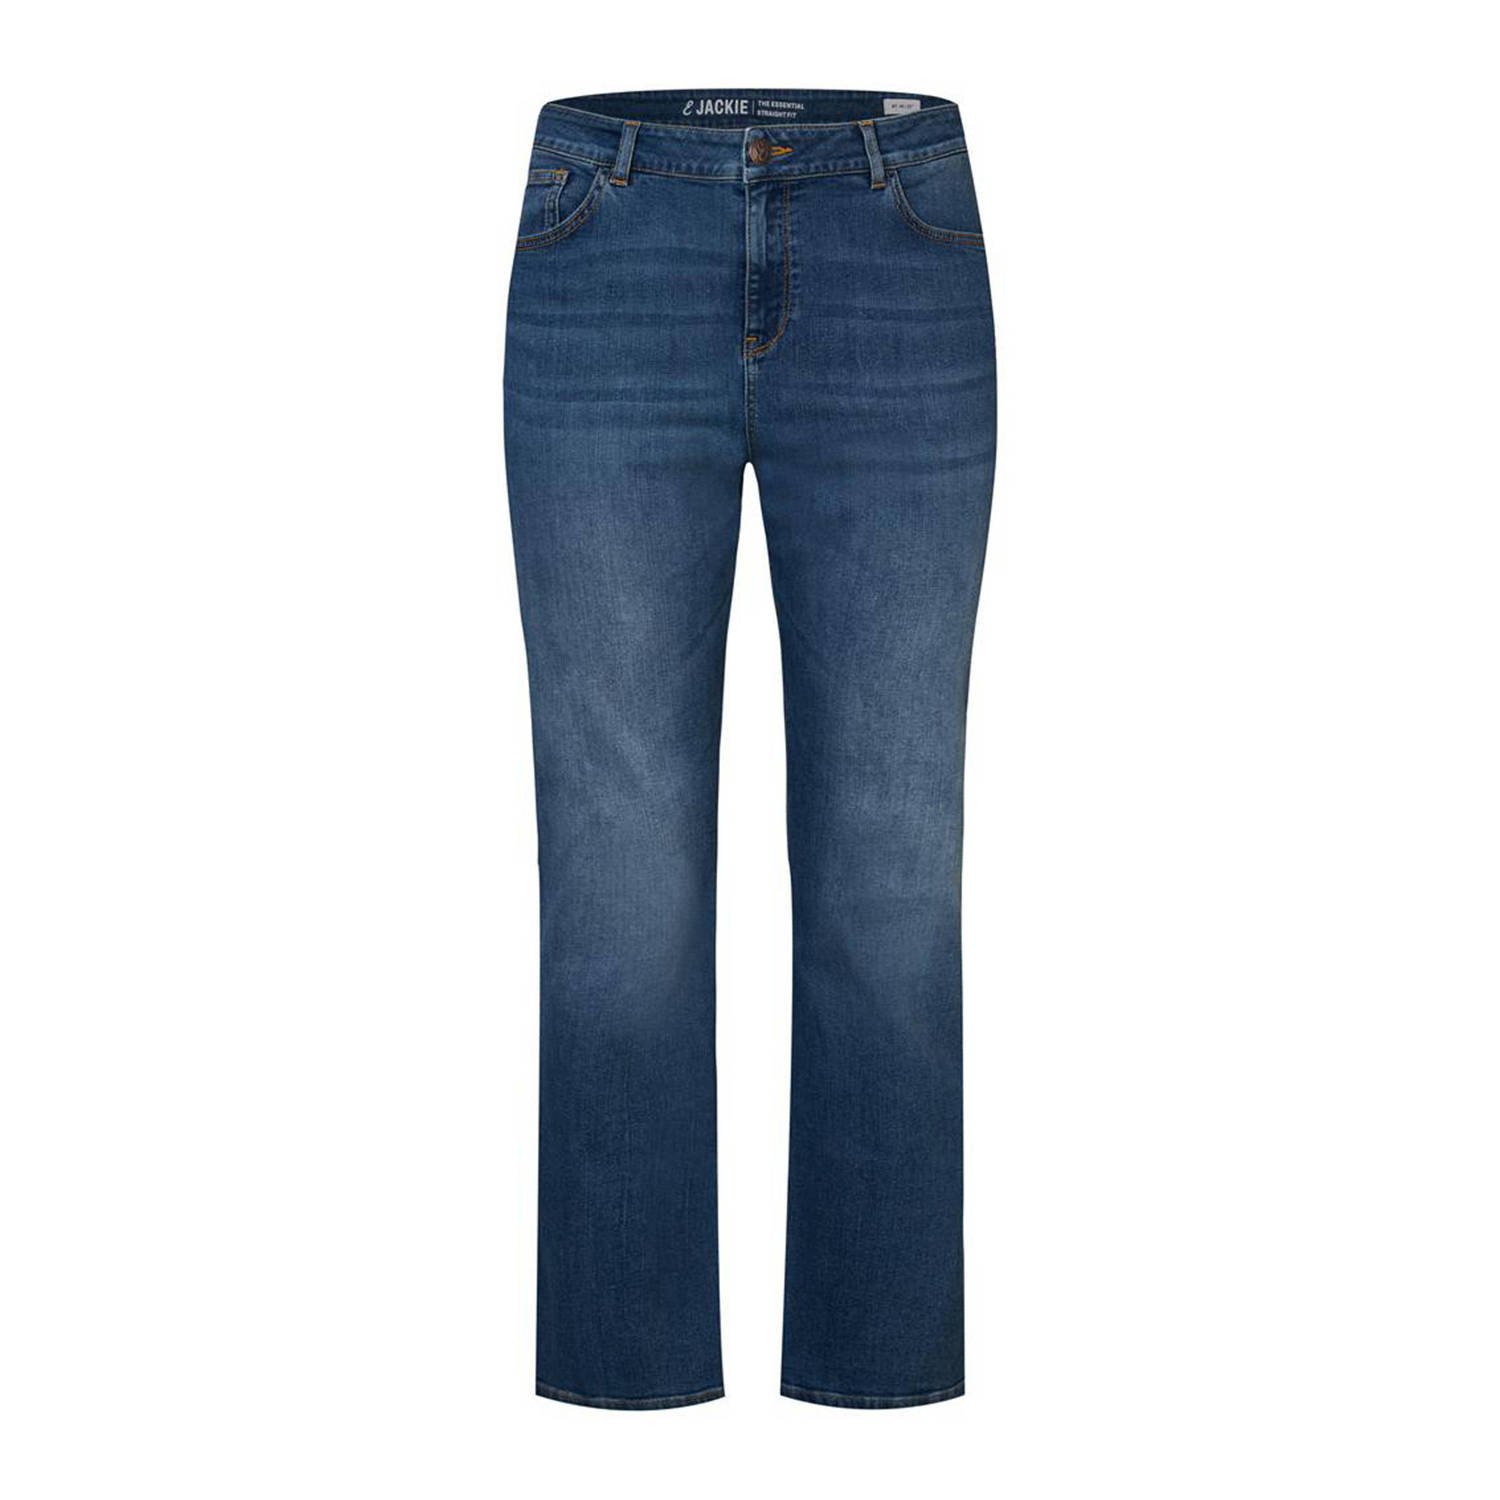 Miss Etam Plus straight jeans dark blue denim